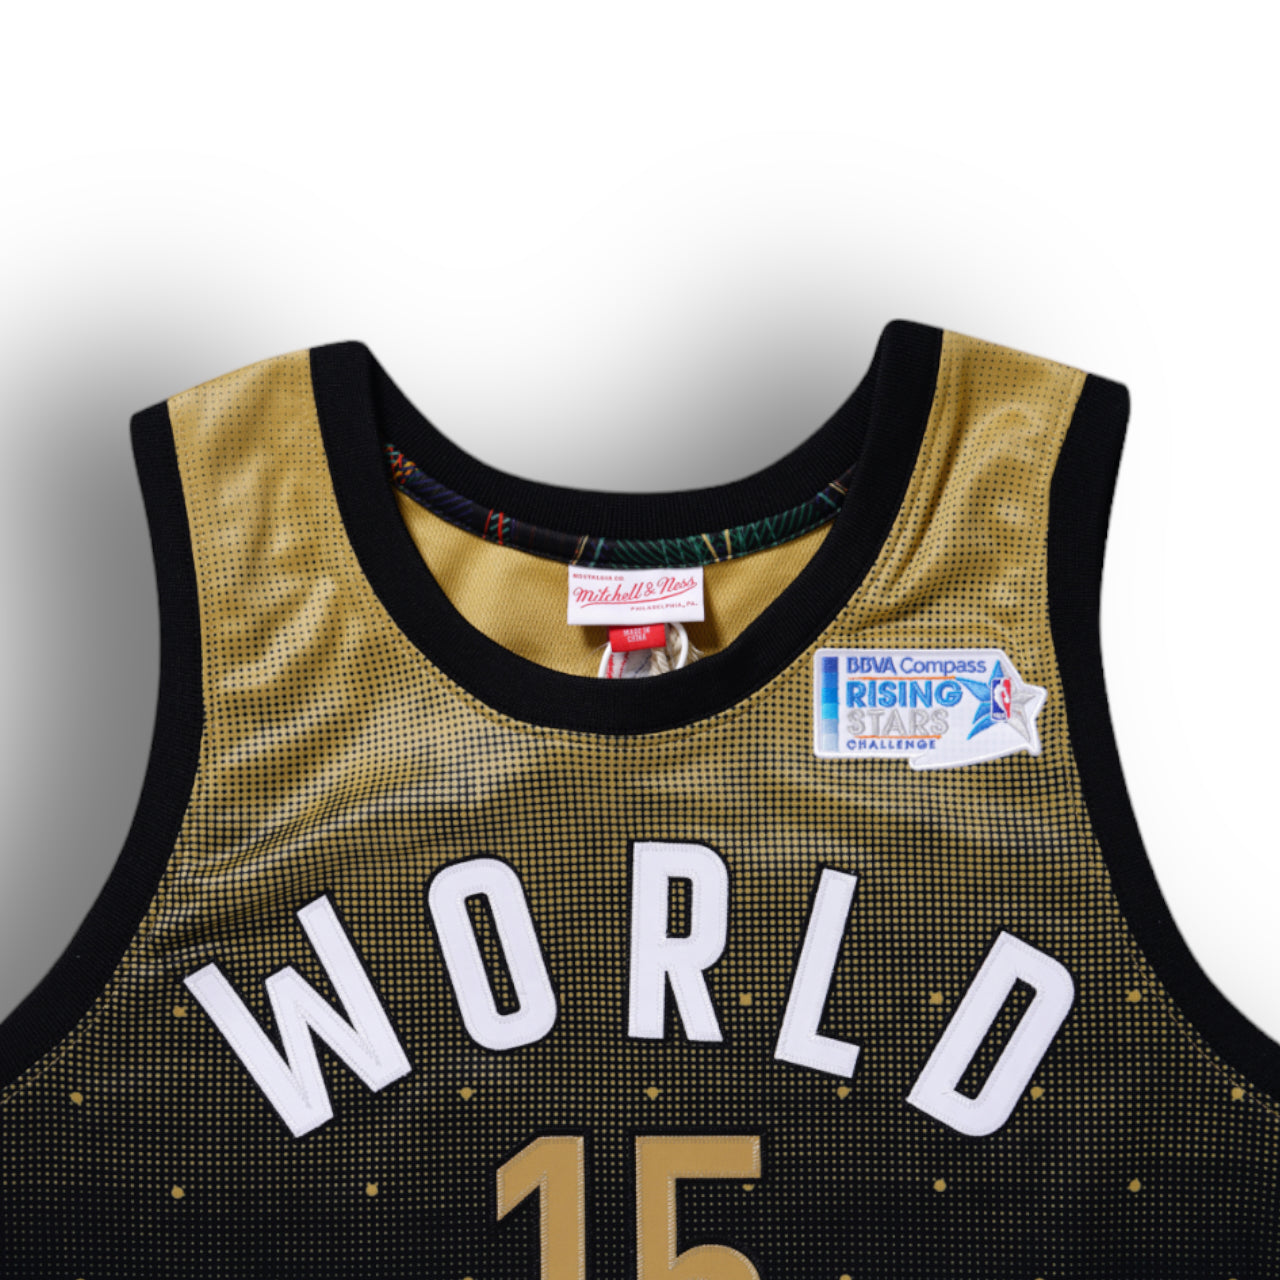 Nikola Jokic "Team World" 2016 NBA Raising Star Game Mitchell & Ness Authentic Jersey - Gold/Black